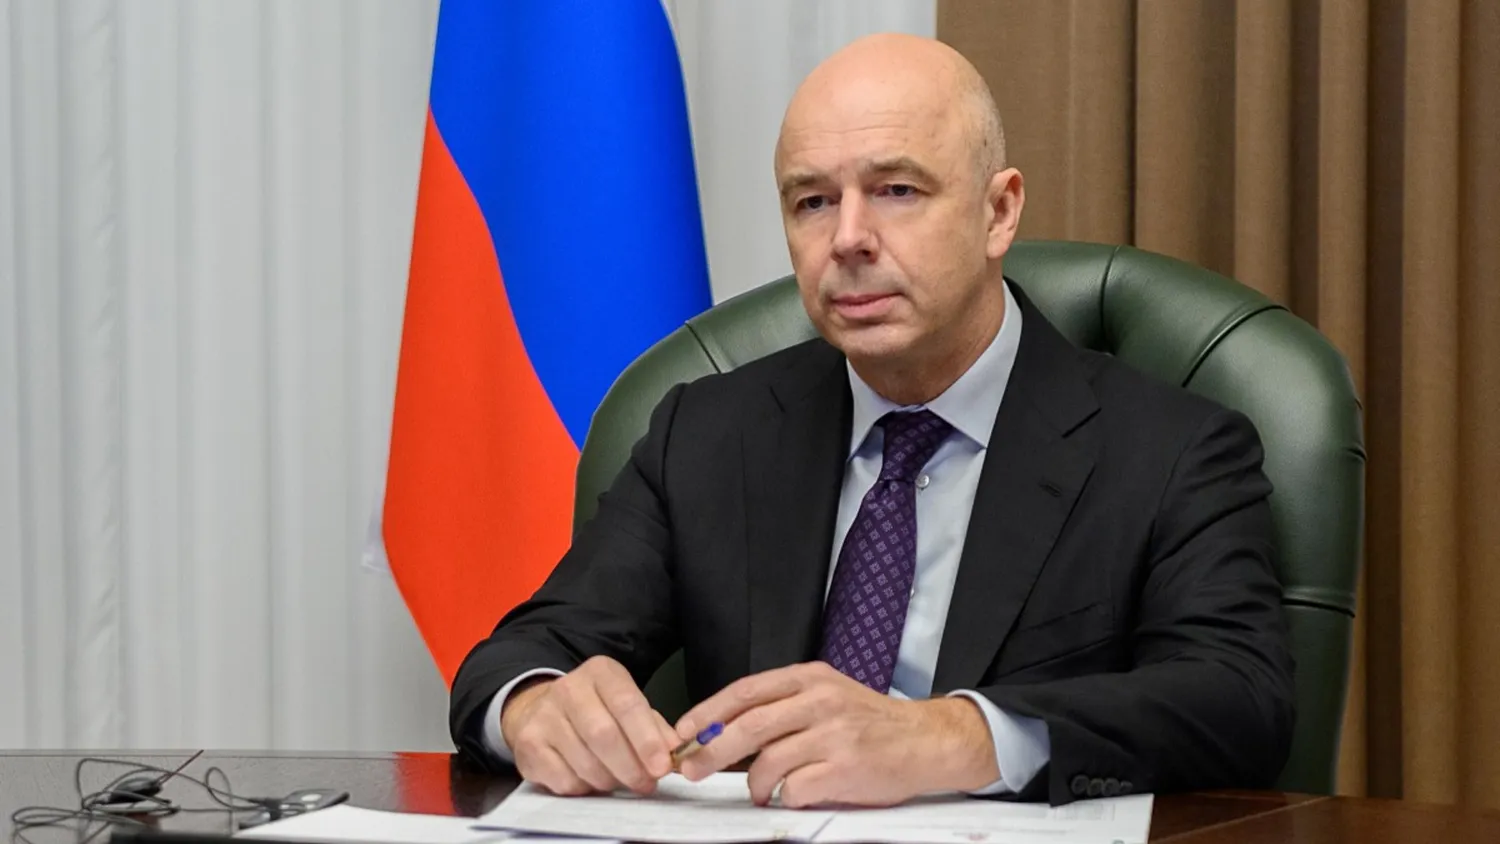 Цифровые рубли налево не уйдут, заявил министр финансов Антон Силуанов